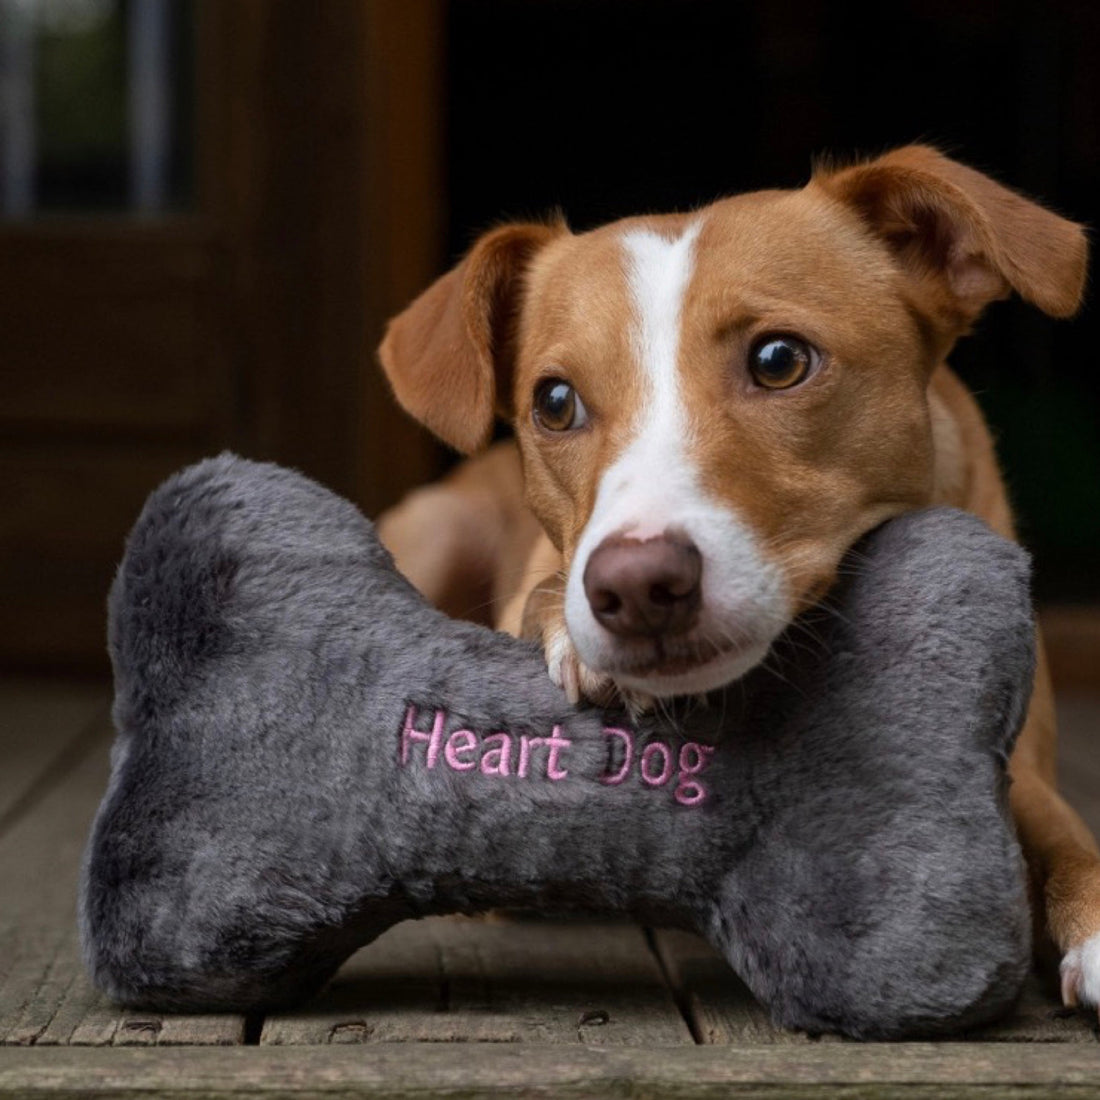 Heart Dog Bone - Woof Living